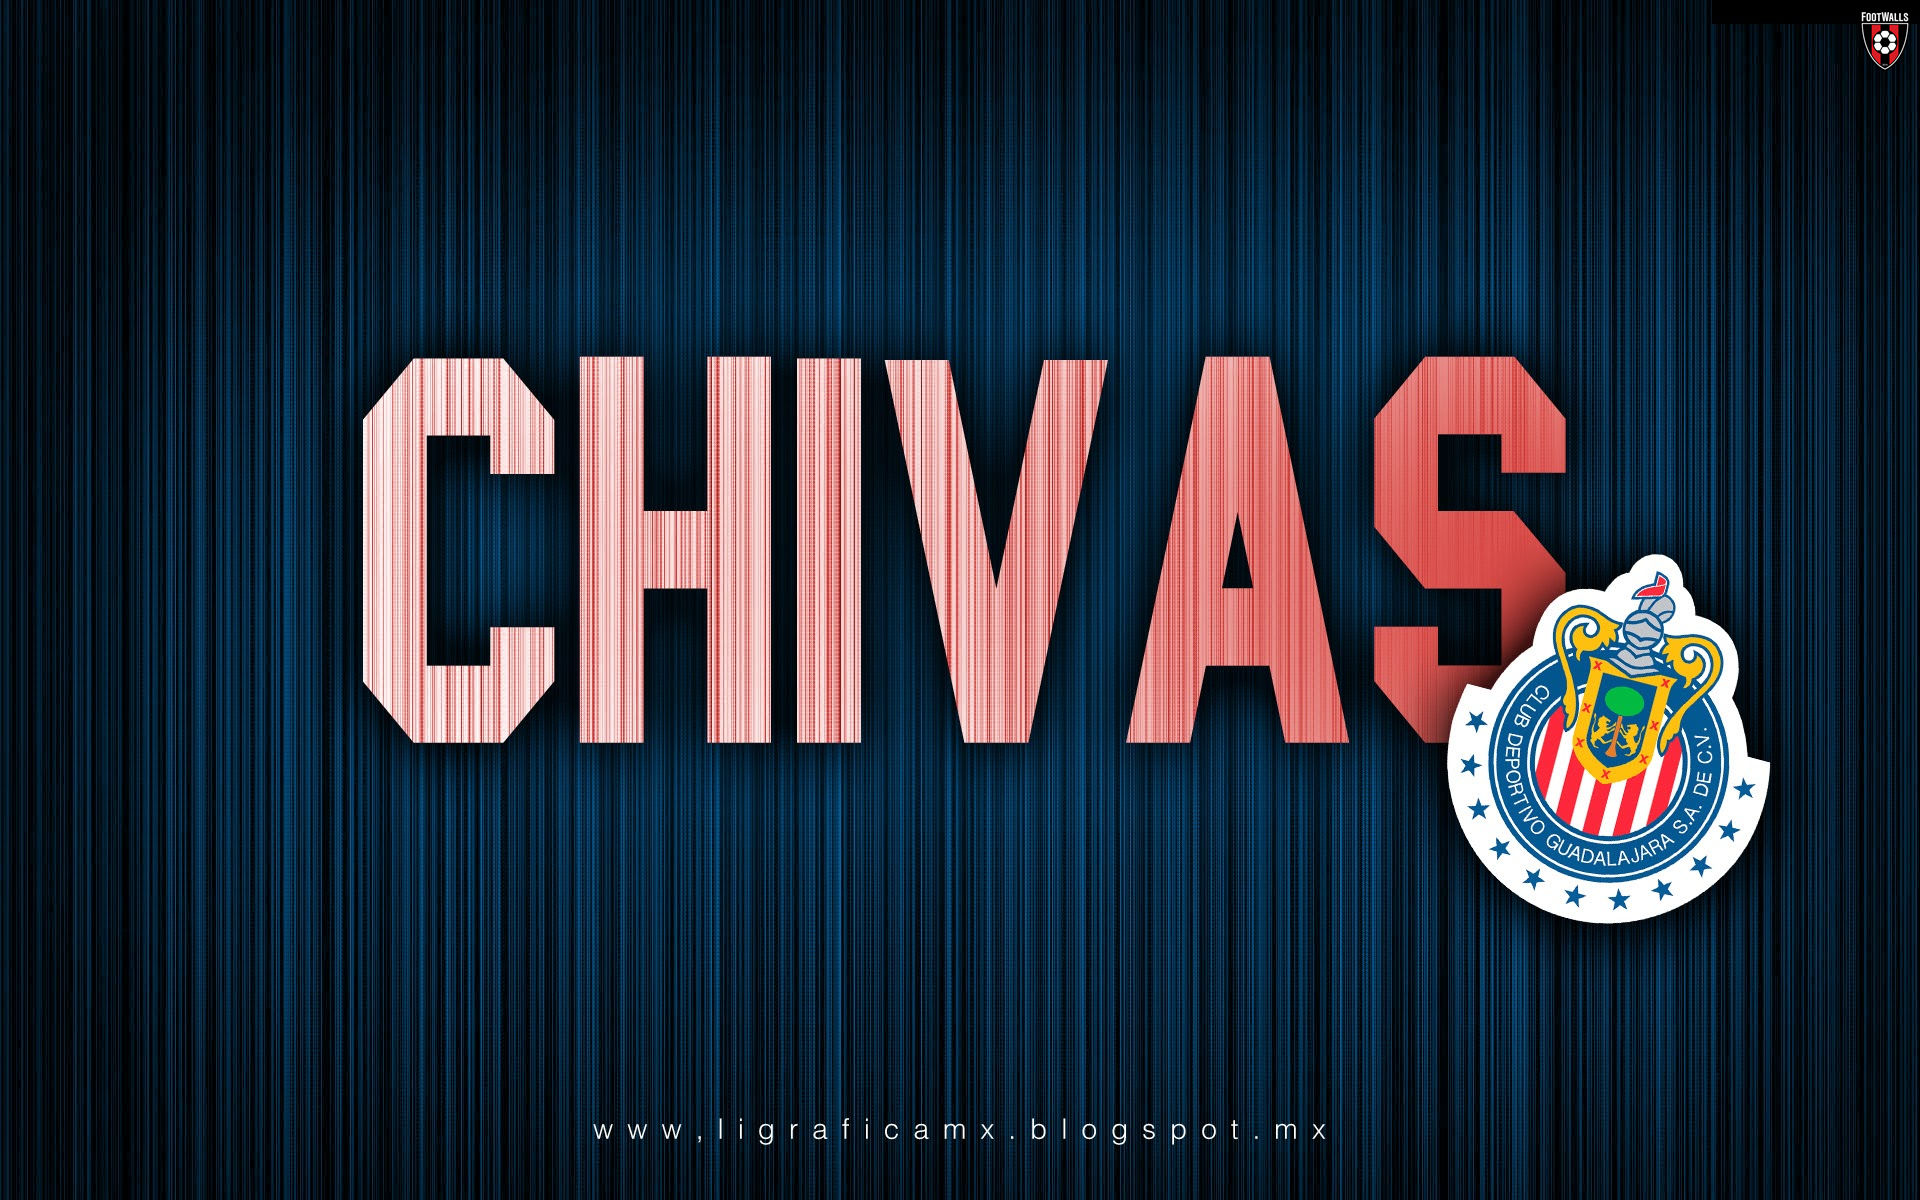 Chivas Guadalajara Wallpaper Football